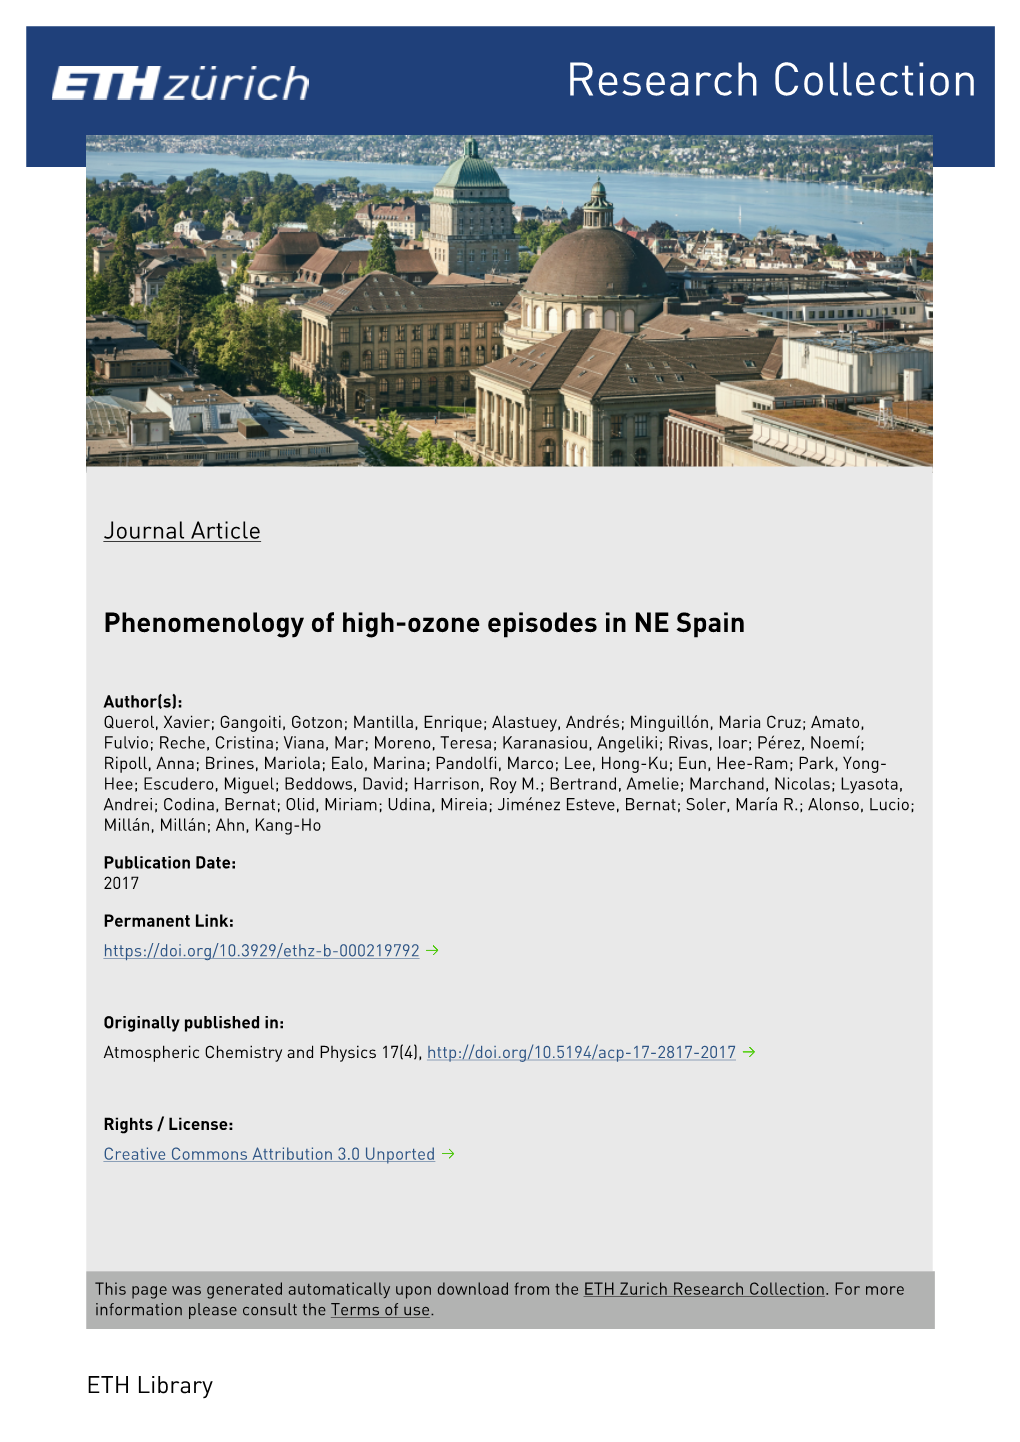 Phenomenology of High-Ozone Episodes in NE Spain